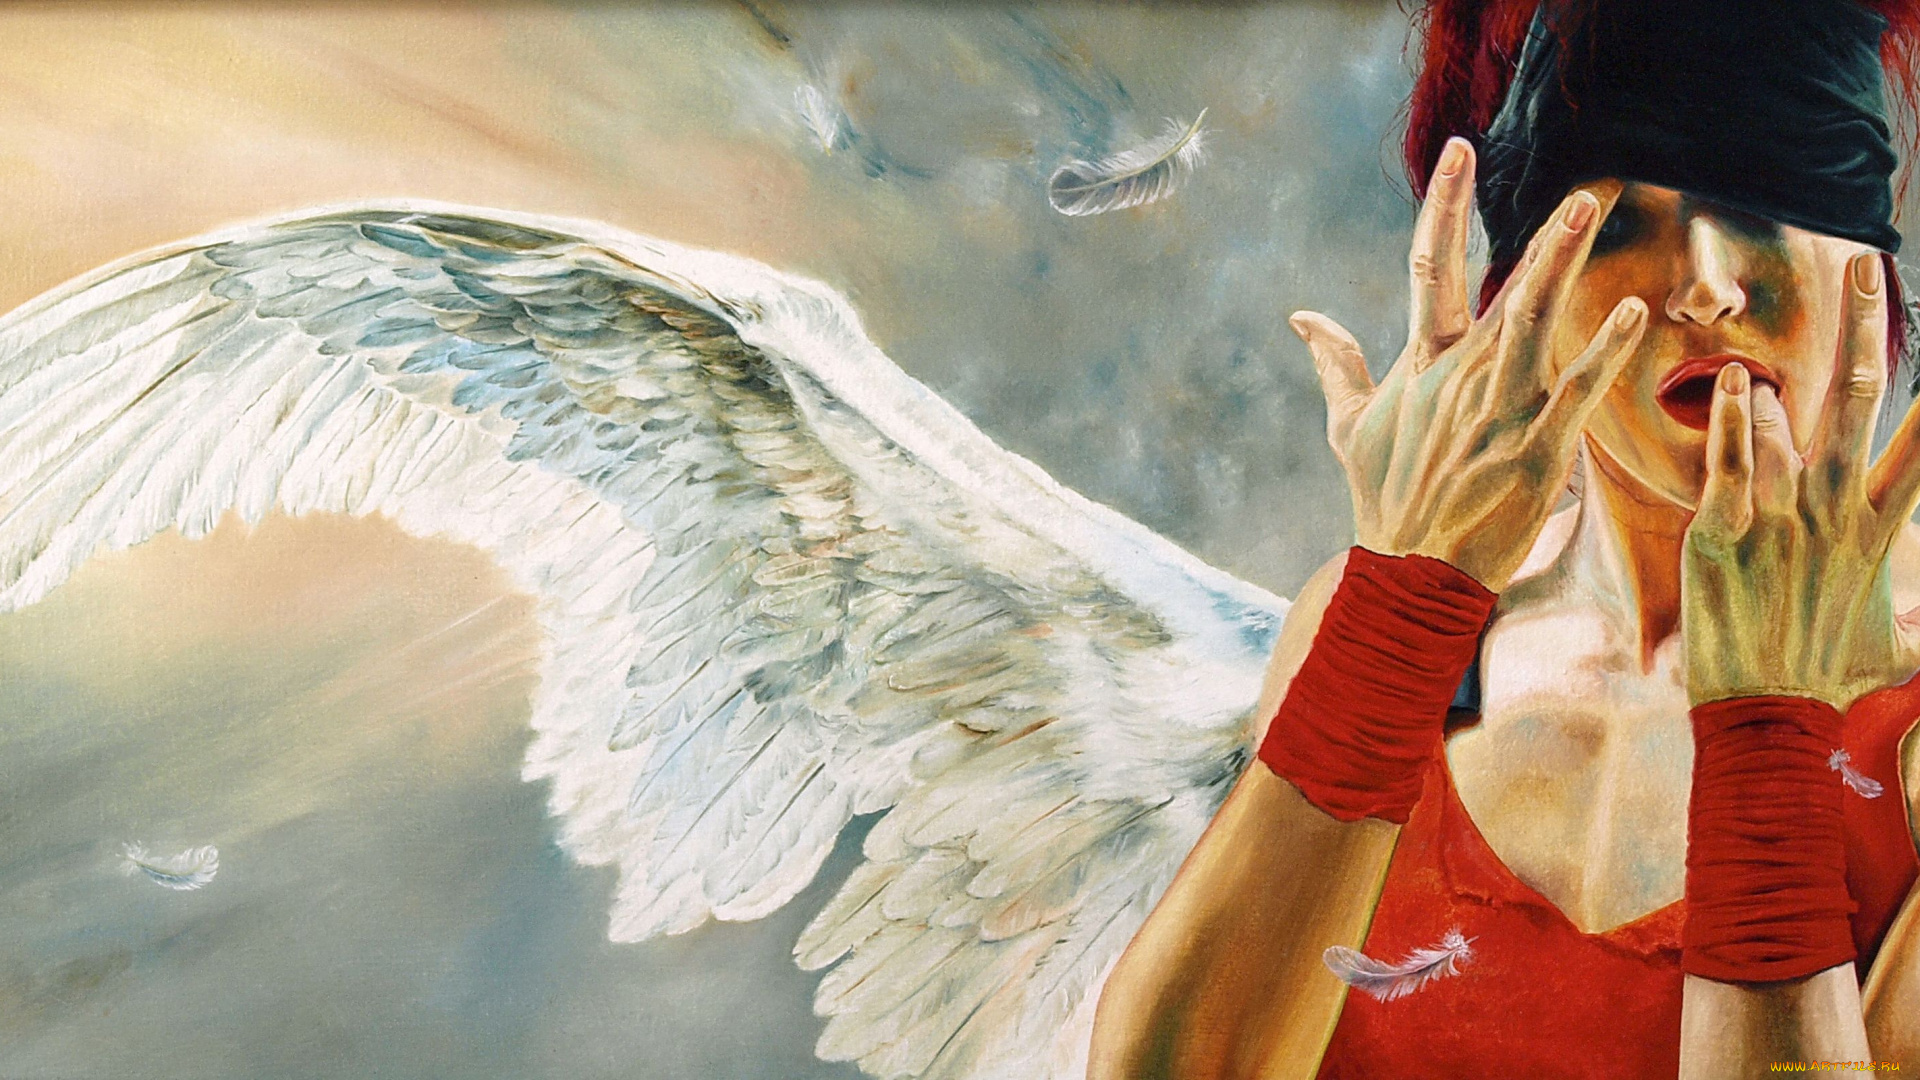 wlodzimierz, kuklinski, №603499, фэнтези, ангелы, девушка, крылья, перья, повязка